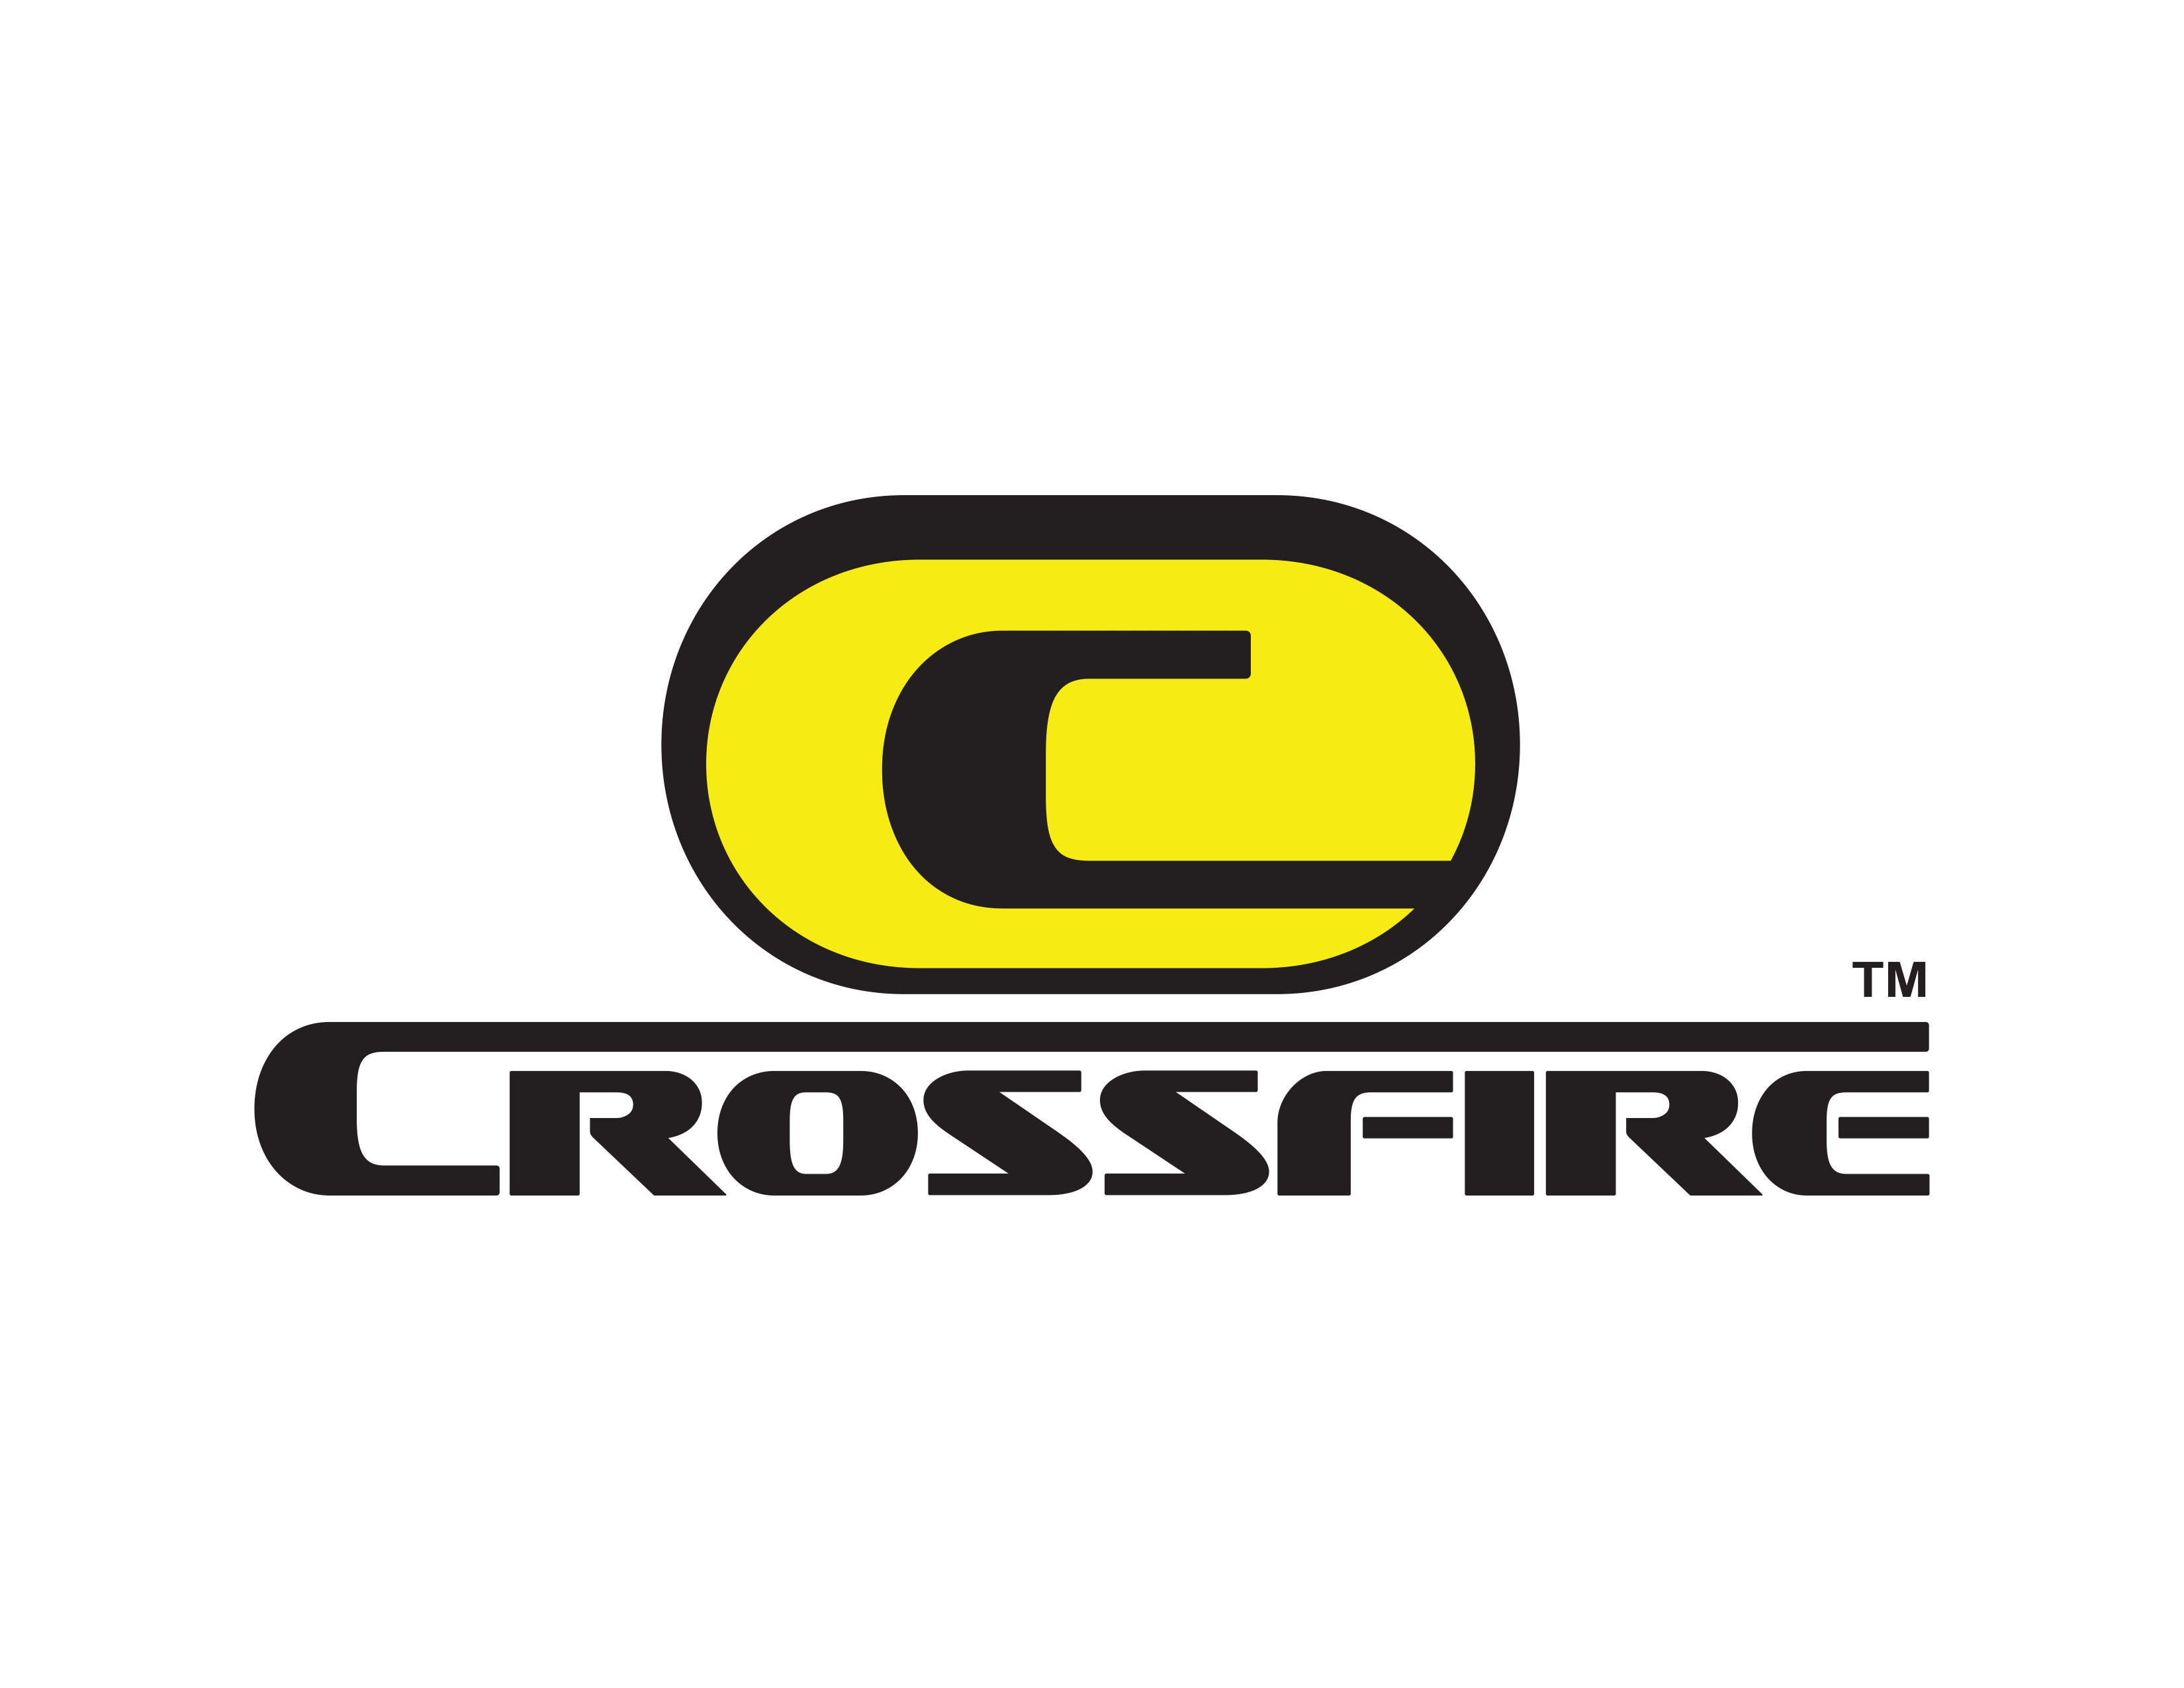 Crossfire: Gun Accessories